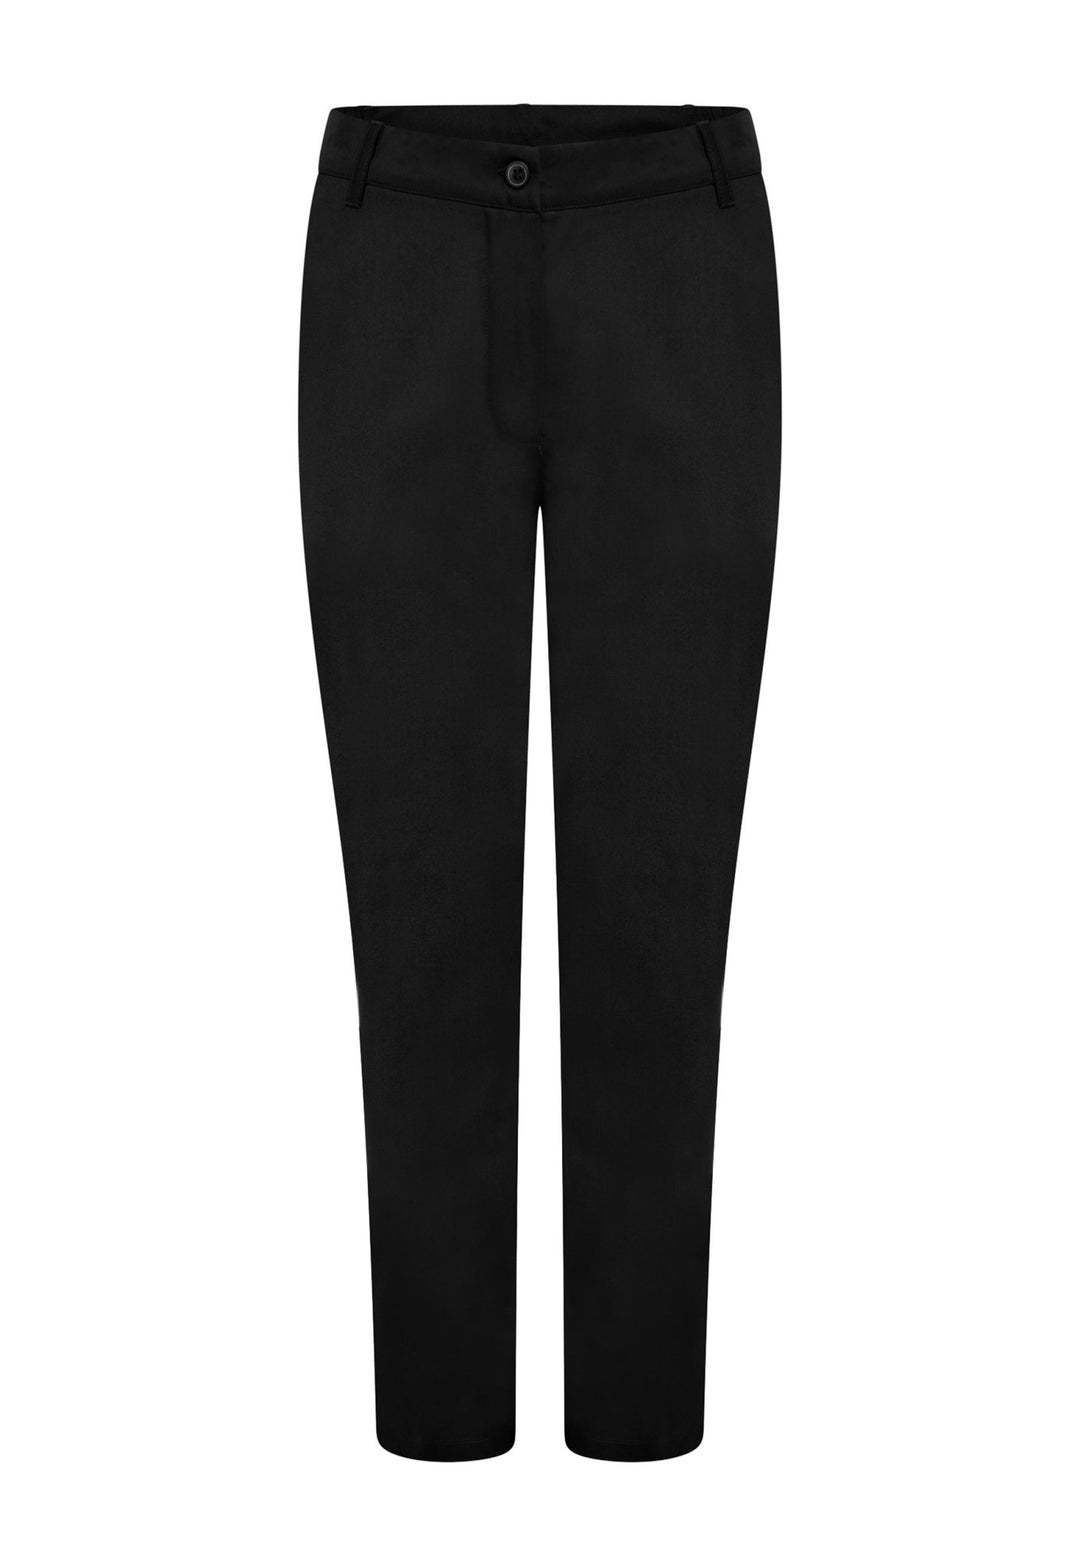 Women's Healthcare Trousers Black NLSPCT - The Work Uniform Company